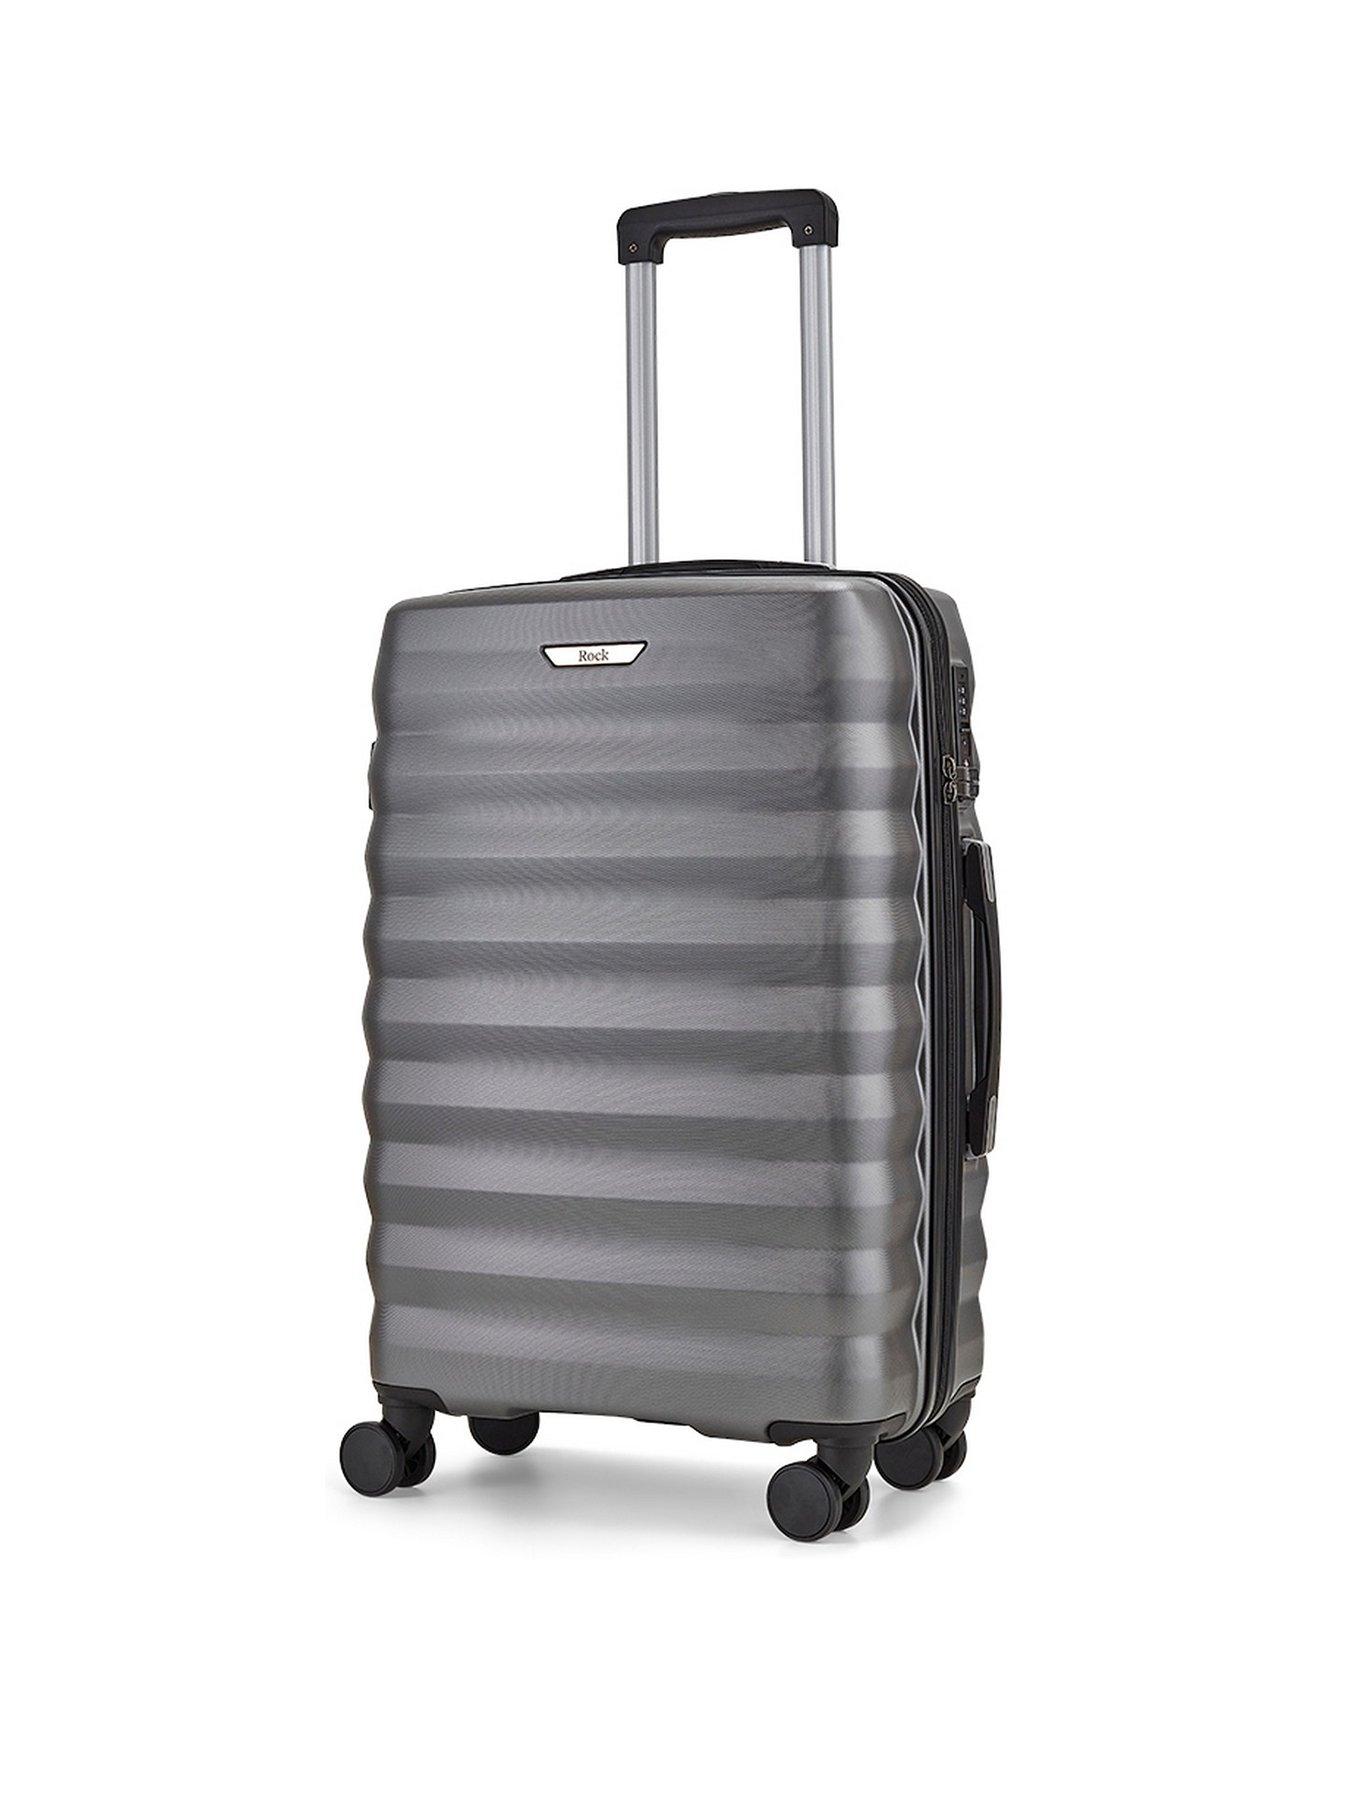 Rock Luggage Berlin 8 Wheel Hardshell Medium Suitcase - Charcoal